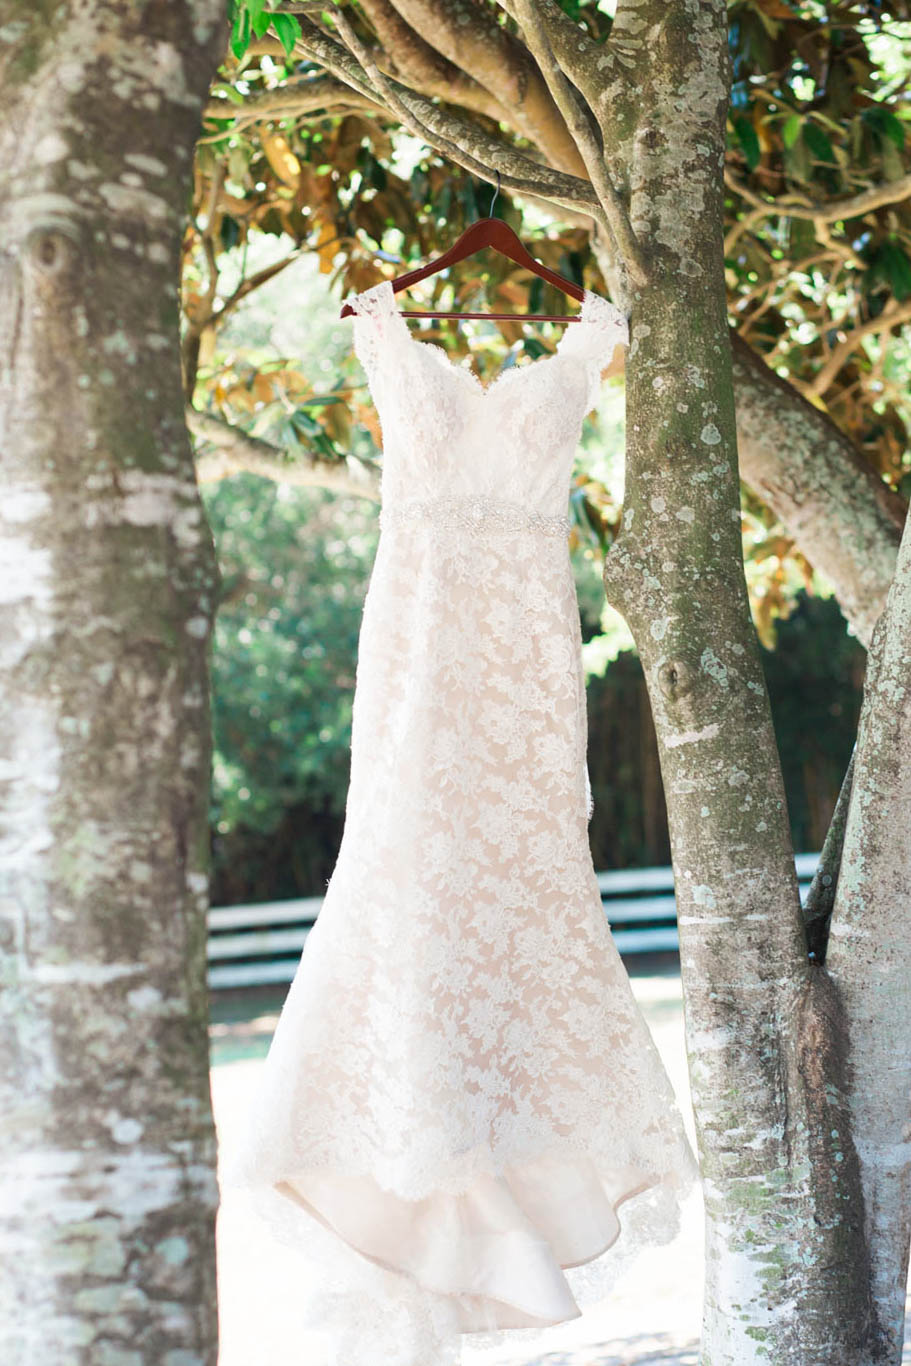 Wedding dress hangs off of tree branch, Alhambra Hall, Mt Pleasant, South Carolina Kate Timbers Photography. http://katetimbers.com #katetimbersphotography // Charleston Photography // Inspiration